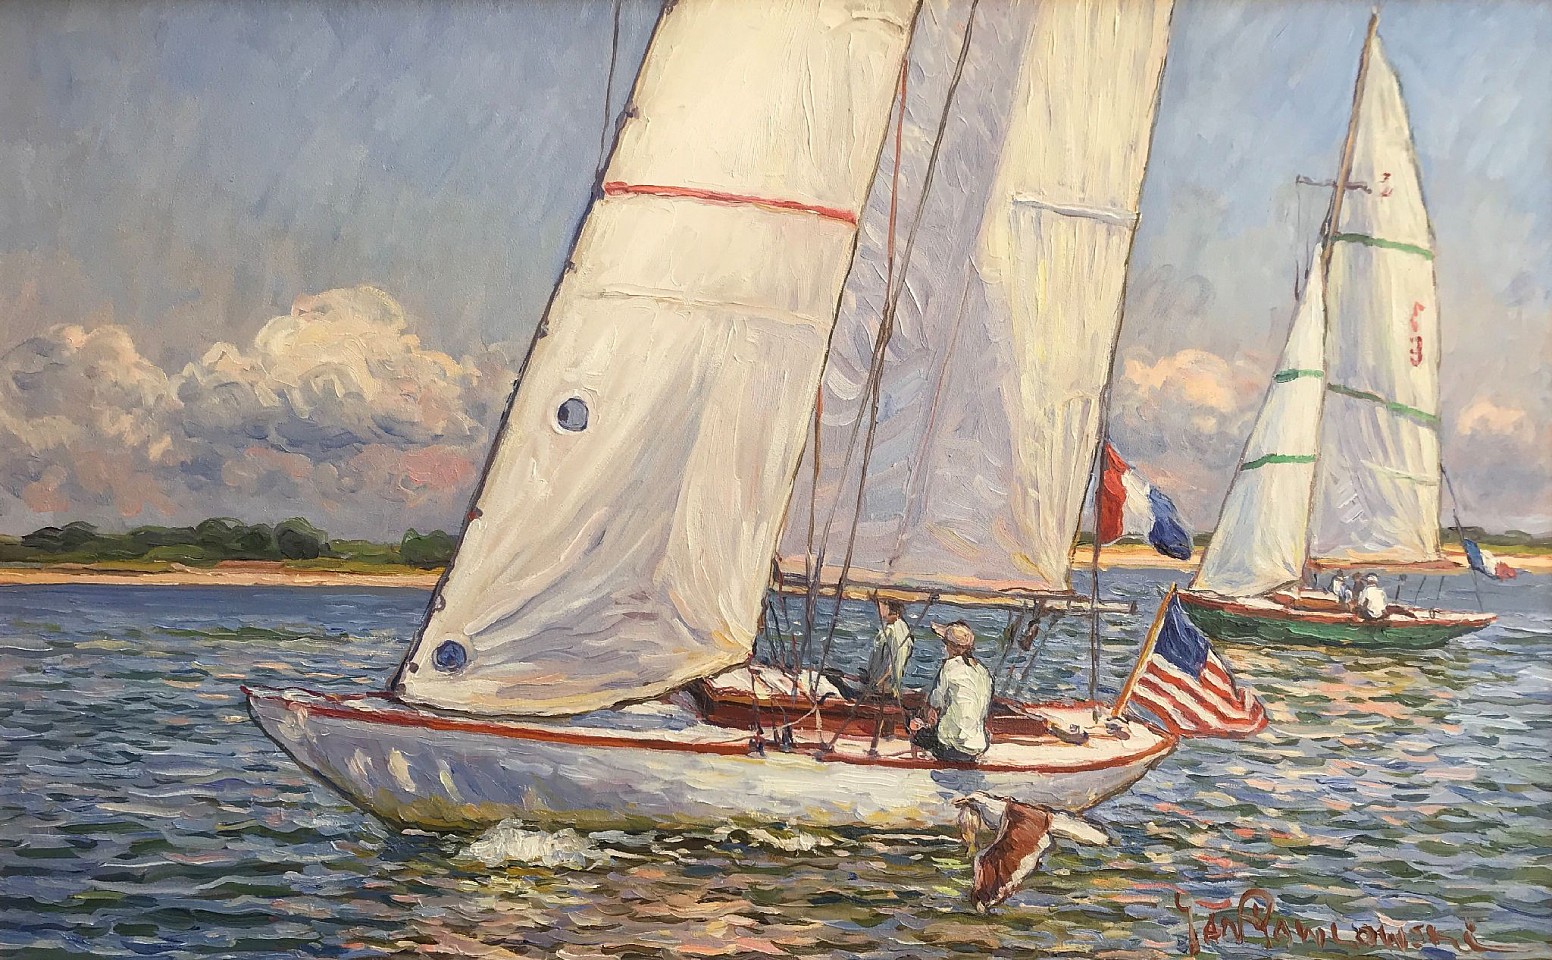 Jan Pawlowski, Happy Sailing (Nantucket), 2017
oil on canvas, 20 x 32 in. (50.8 x 81.3 cm)
JP1020001